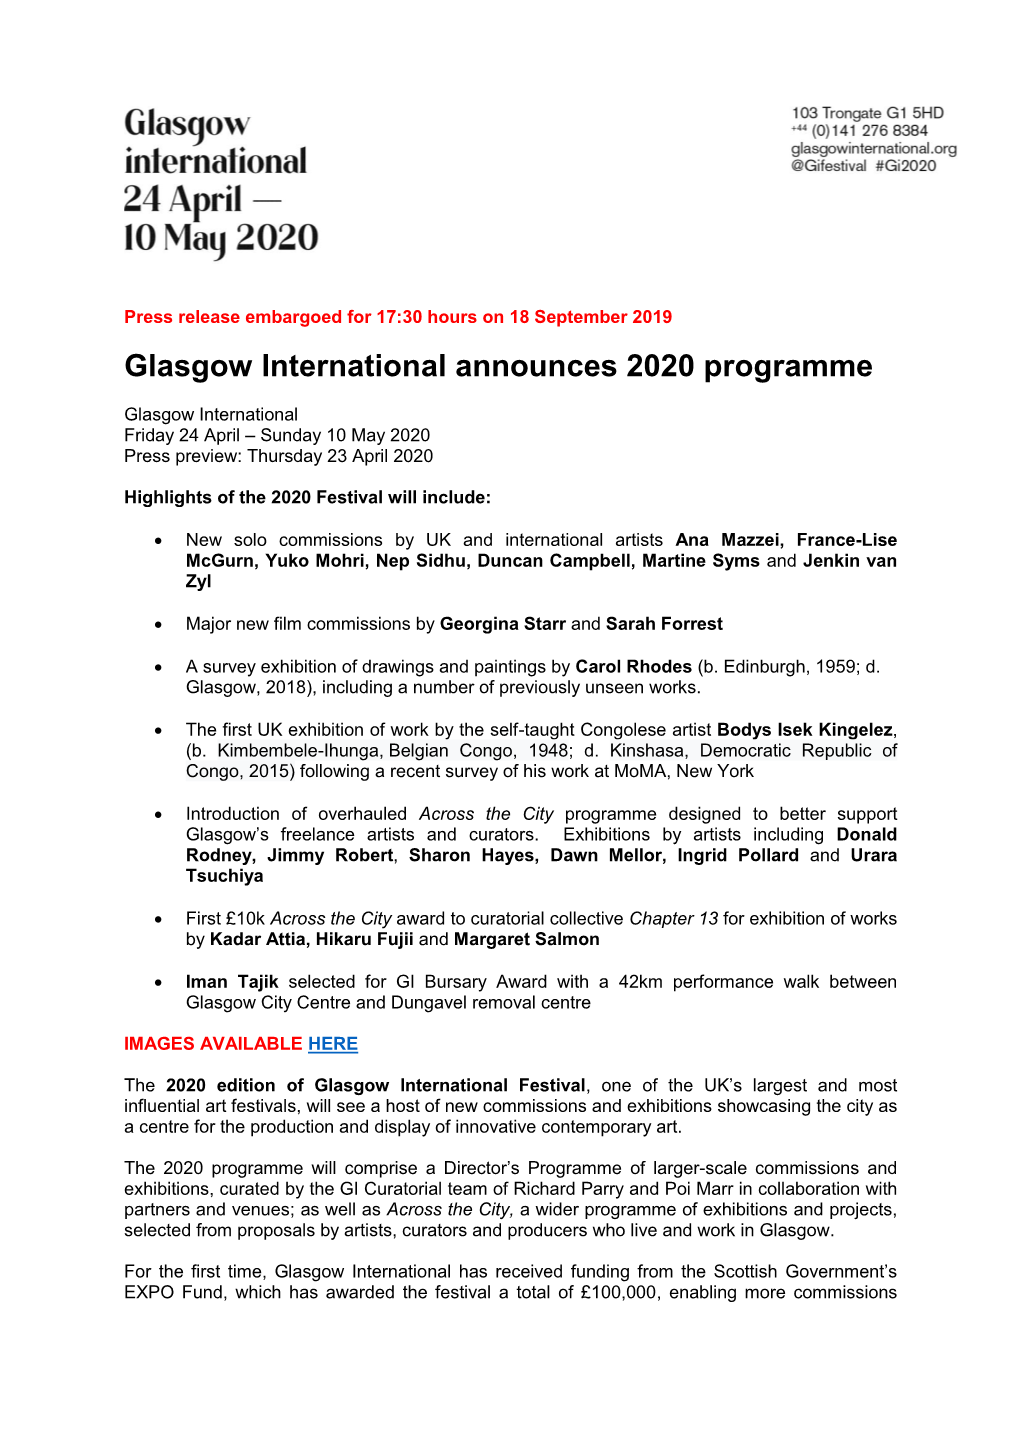 Glasgow International Announces 2020 Programme